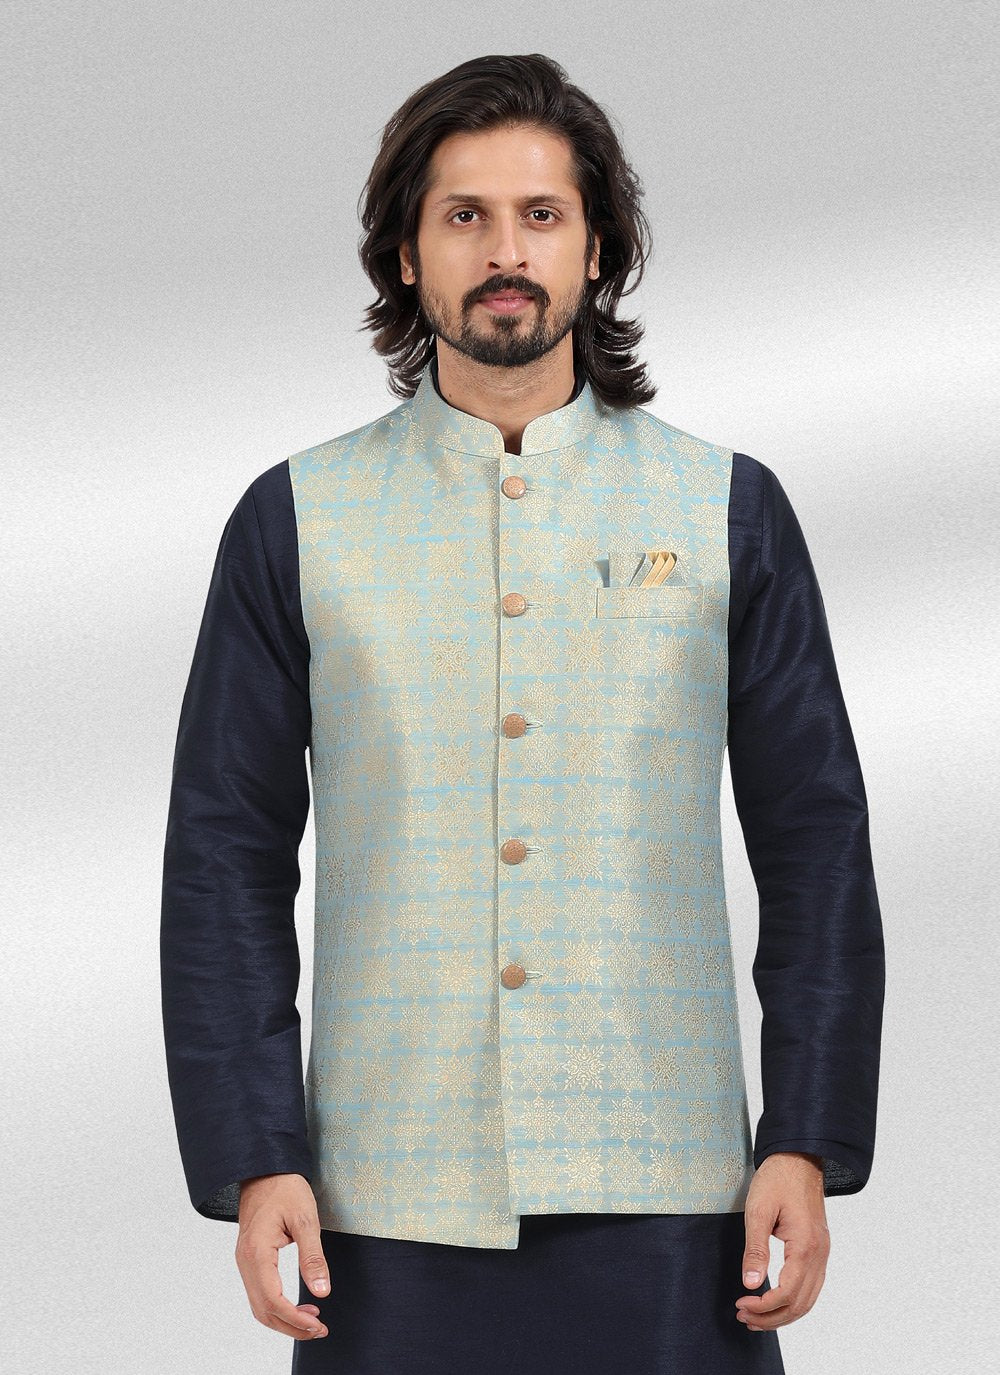 Kurta Payjama With Jacket Banarasi Jacquard Aqua Blue Blue Fancy Work Mens